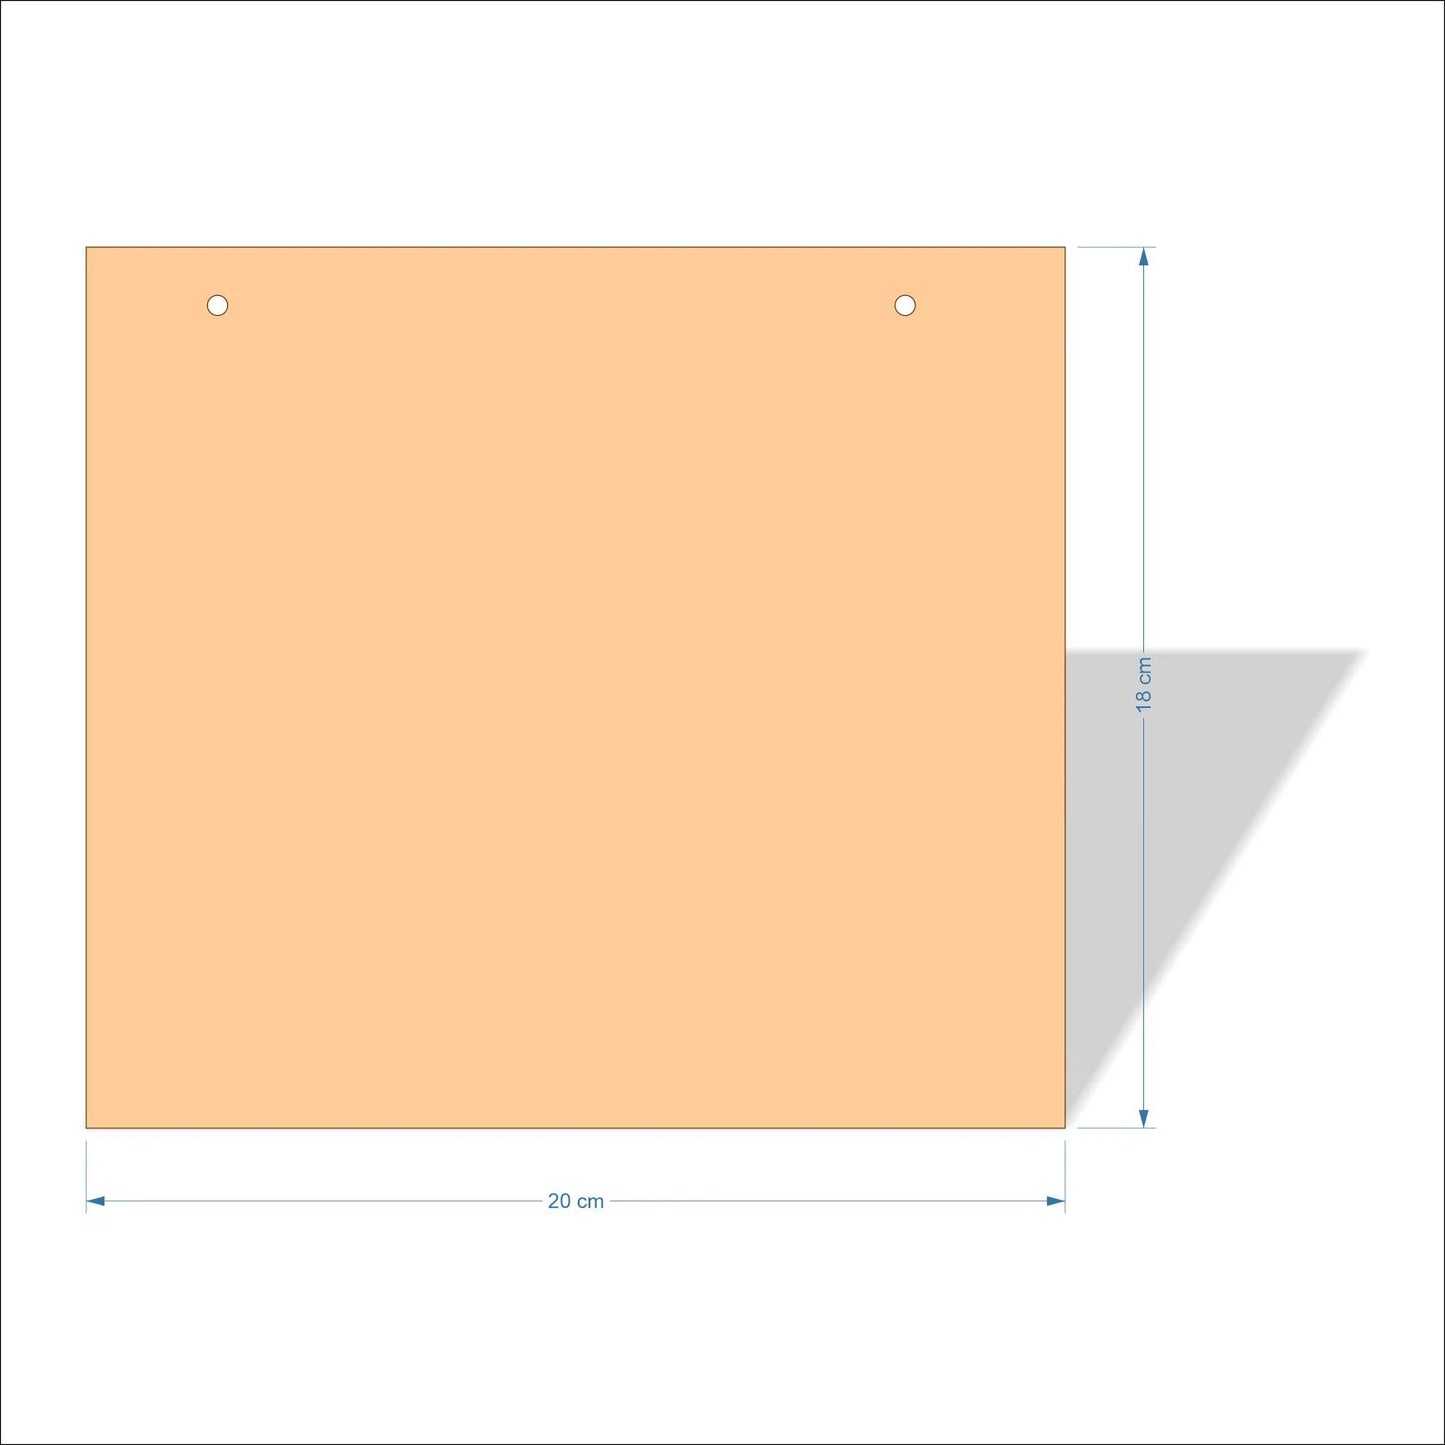 20 cm X 18 cm 4mm poplar plywood Plaques with square corners